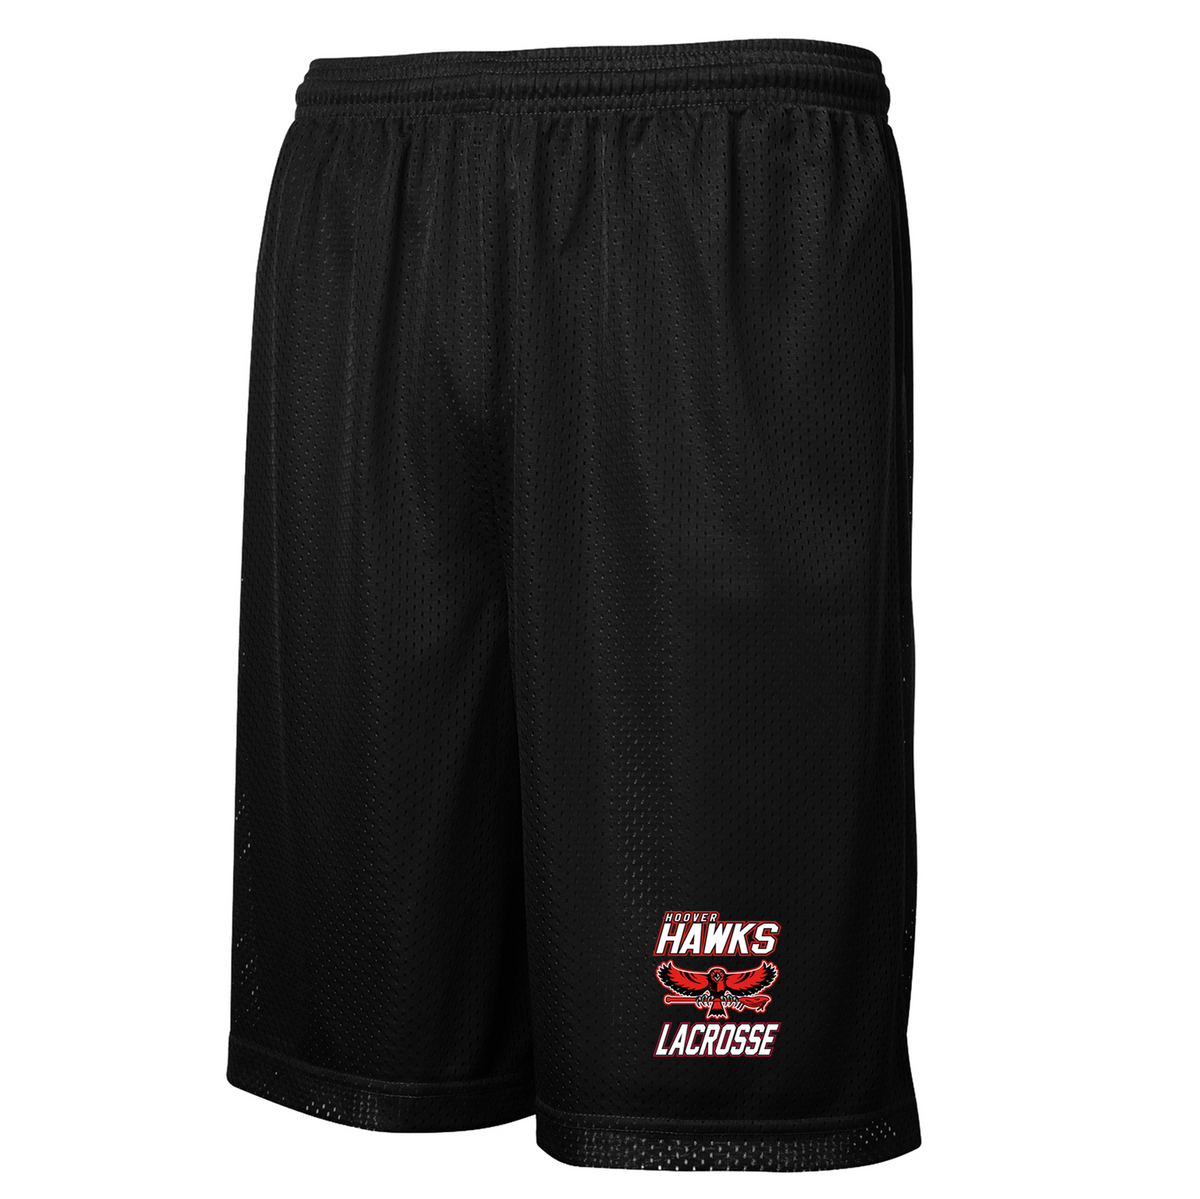 Hawks Lacrosse Classic Mesh Shorts